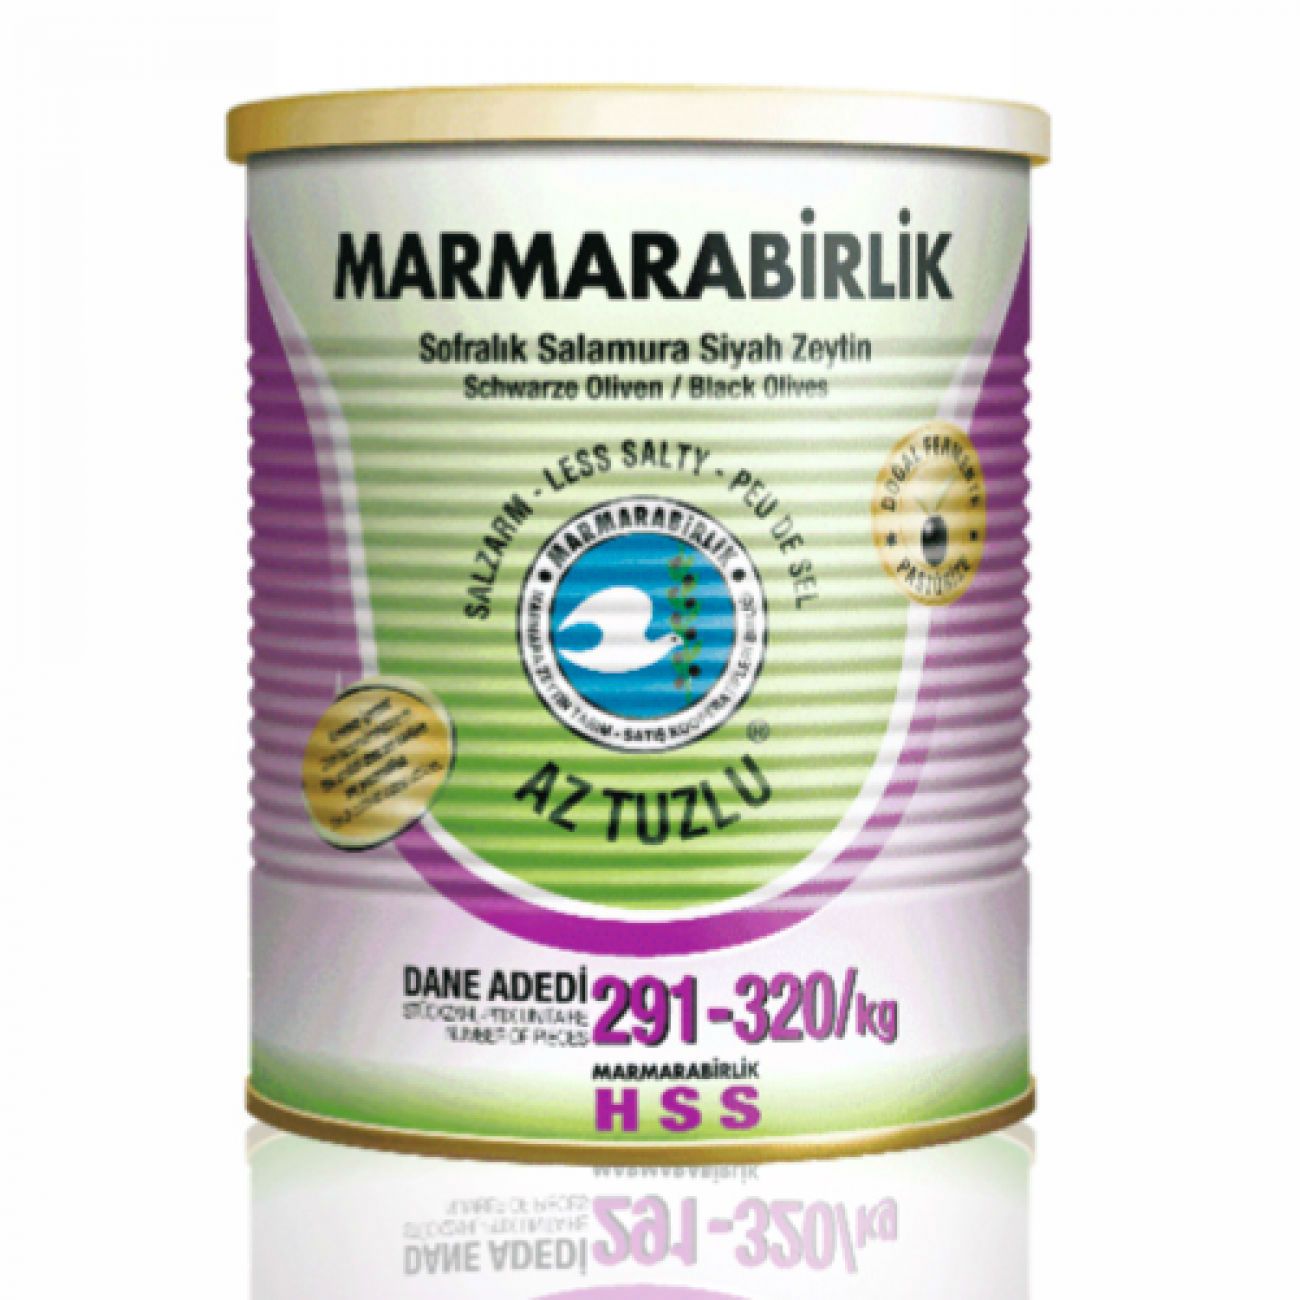 Marmara Birlik Hususi Az Tuzlu Olives (400G) - Aytac Foods